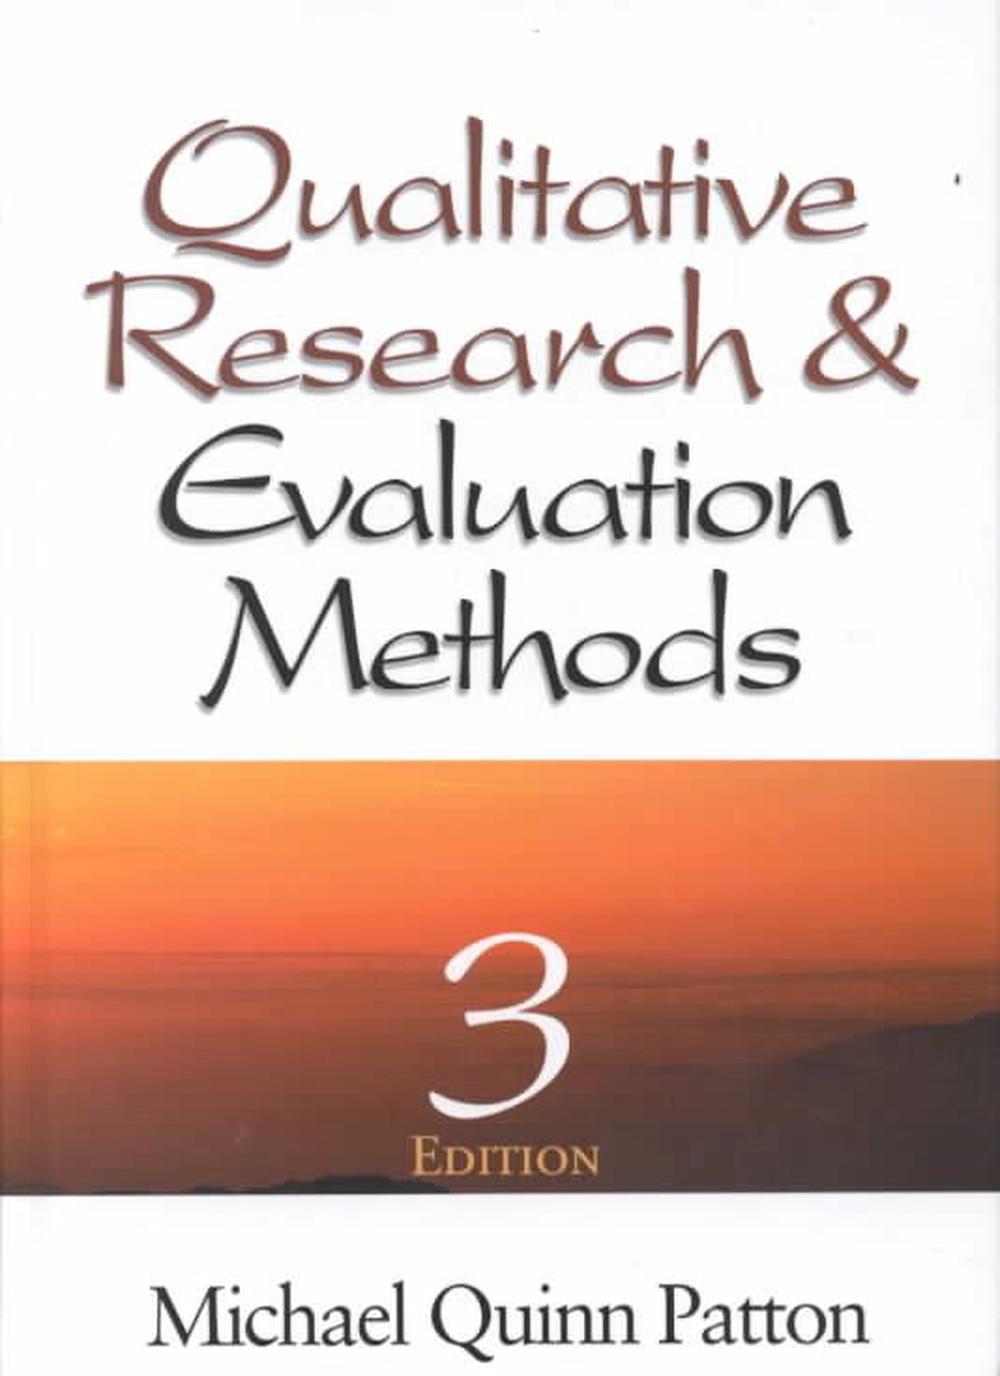 qualitative research & evaluation methods by michael quinn patton